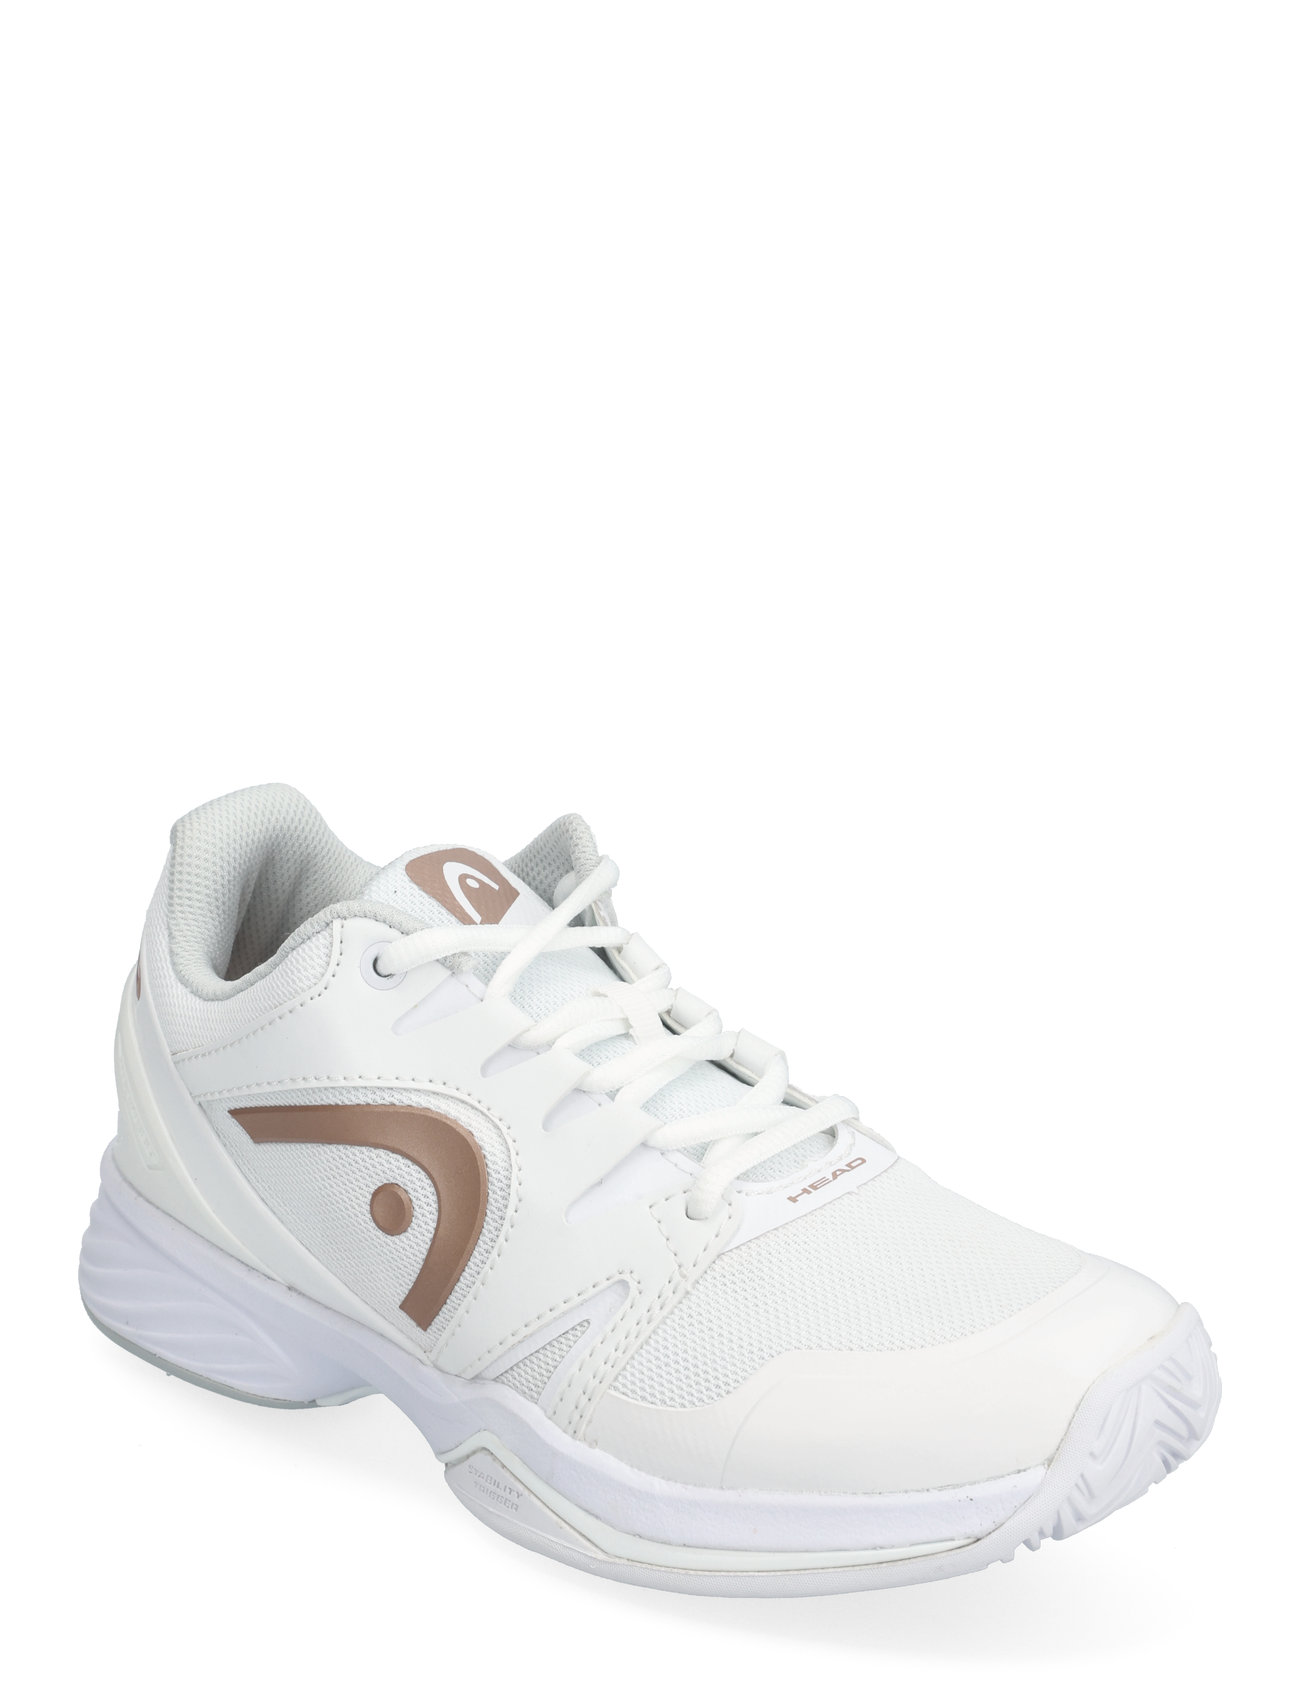 Sprint Ltd. Women Whwh Sport Sport Shoes Racketsports Shoes Tennis Shoes White Head